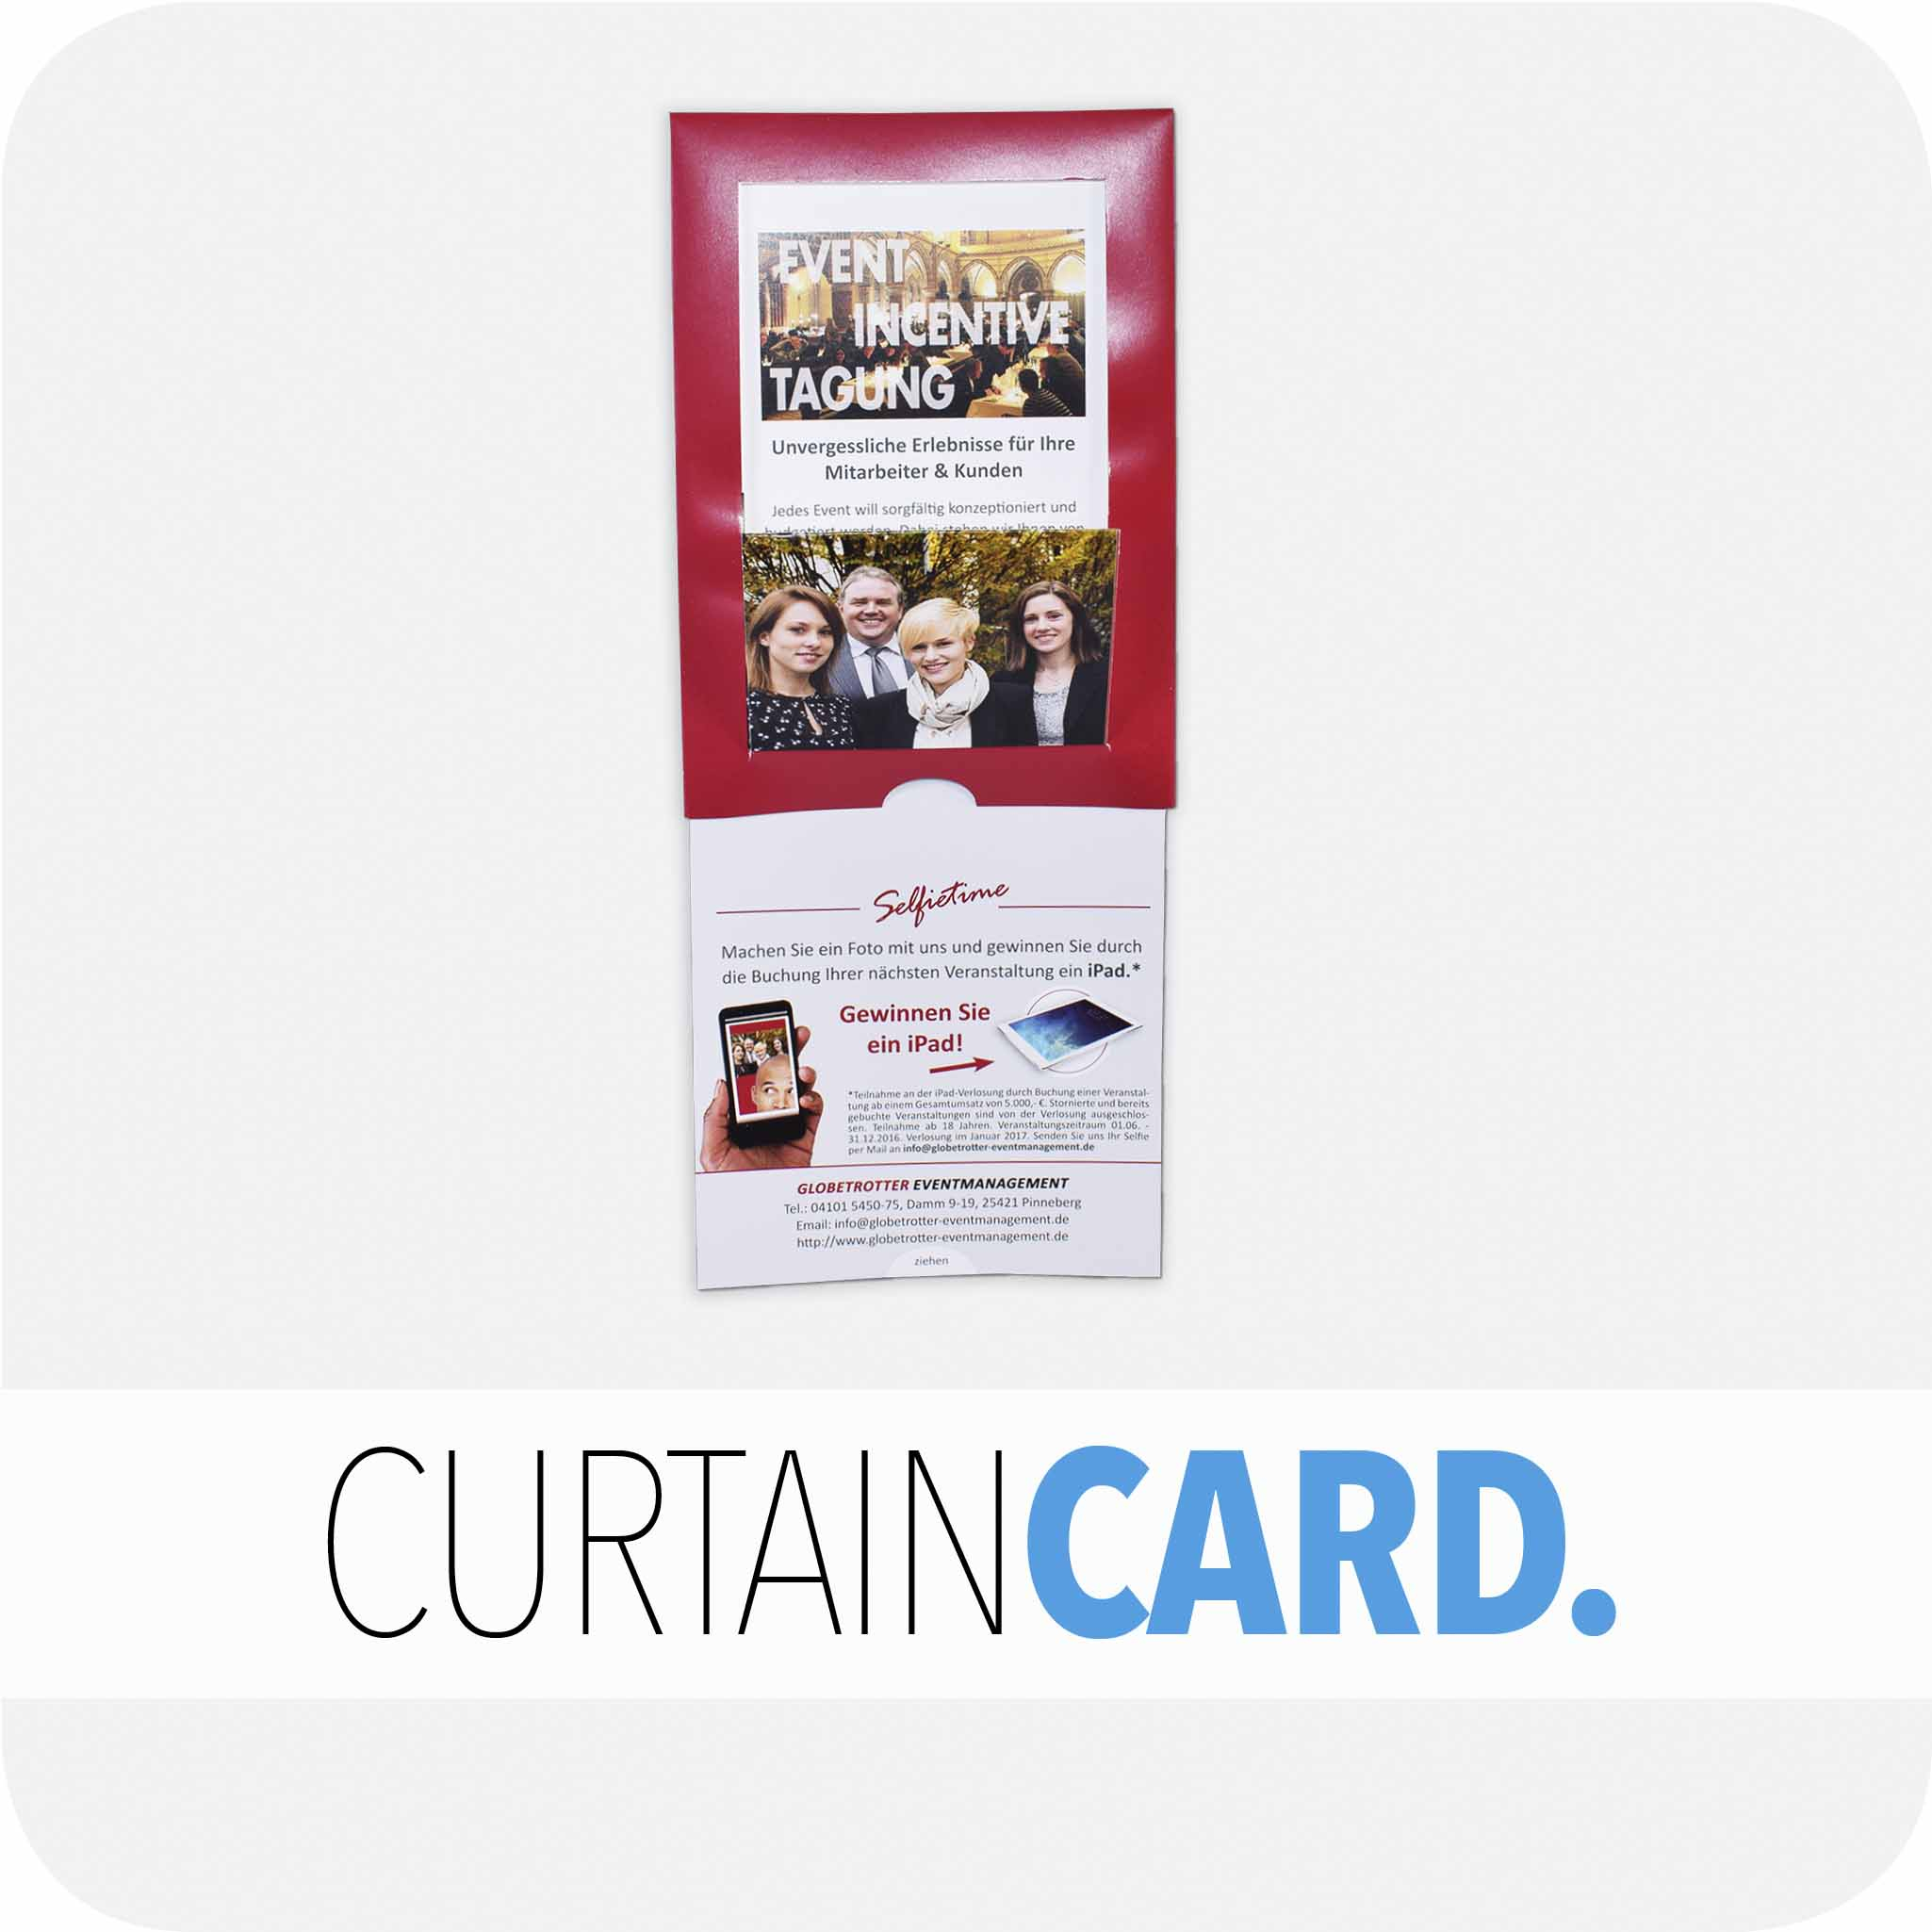 Curtain card